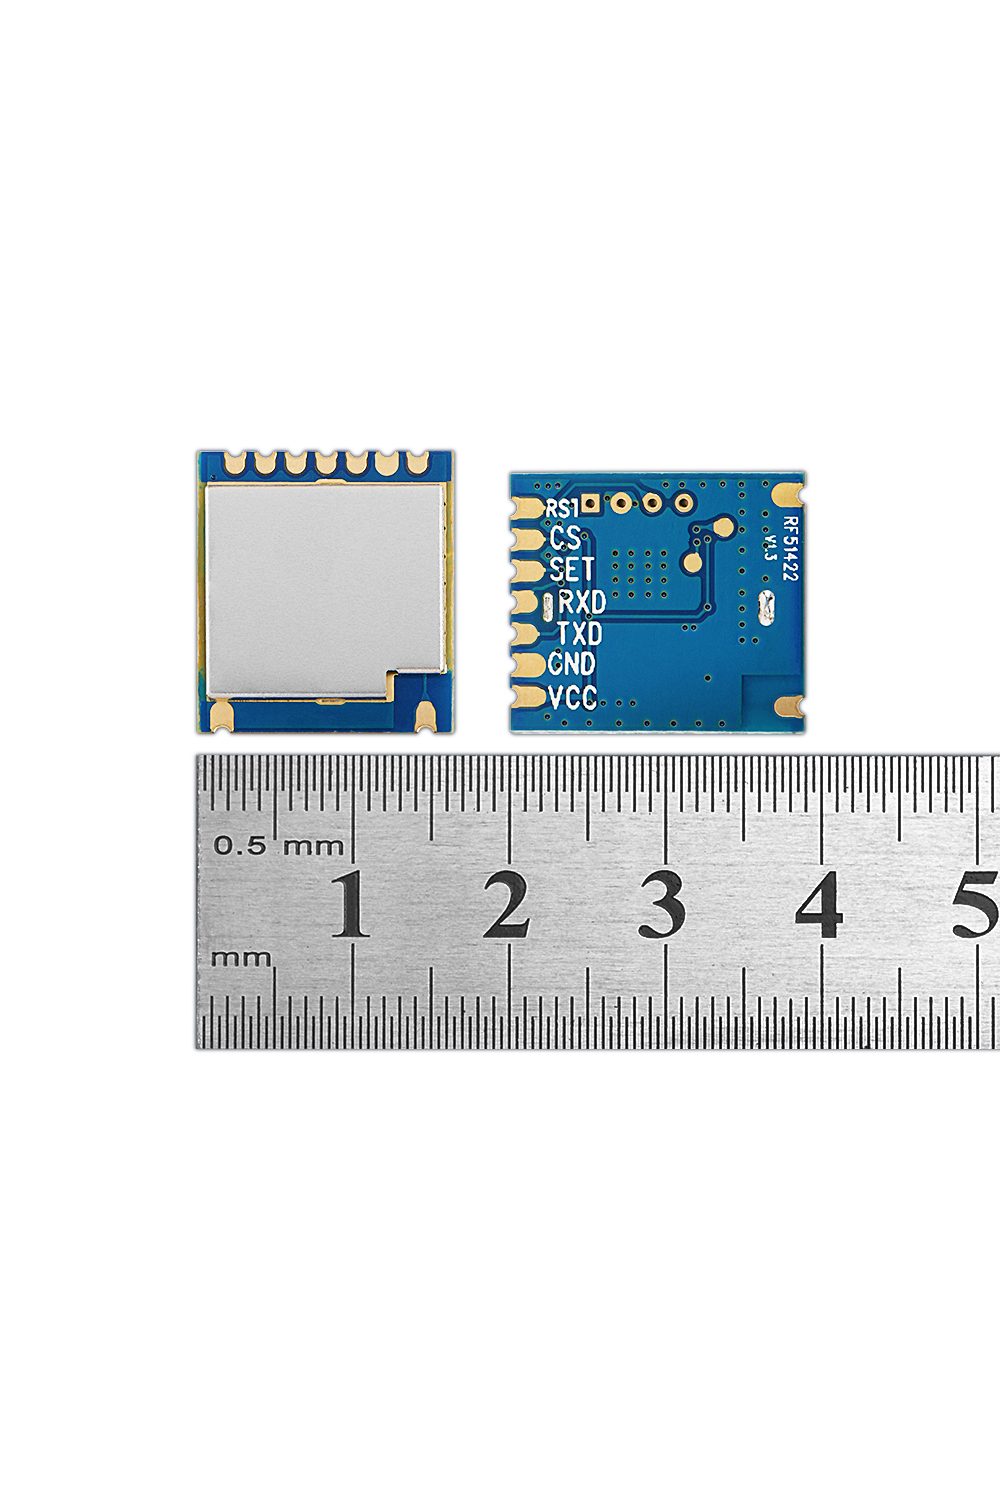  RF51422 : ANT+ Uart RF Transceiver Module Adopts SOC Chip